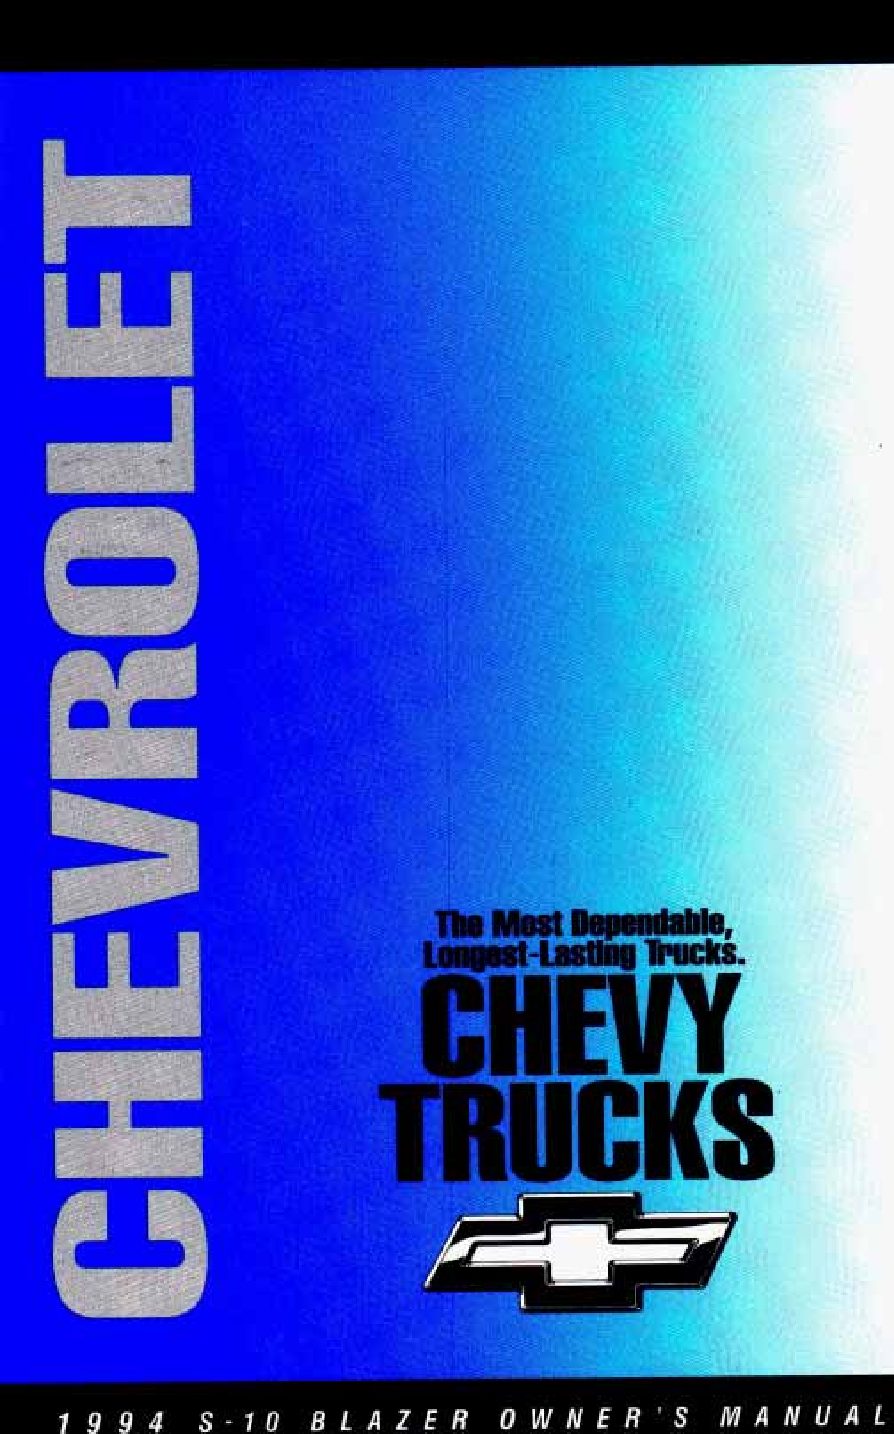 1994 Chevrolet Blazer owner’s manual Image